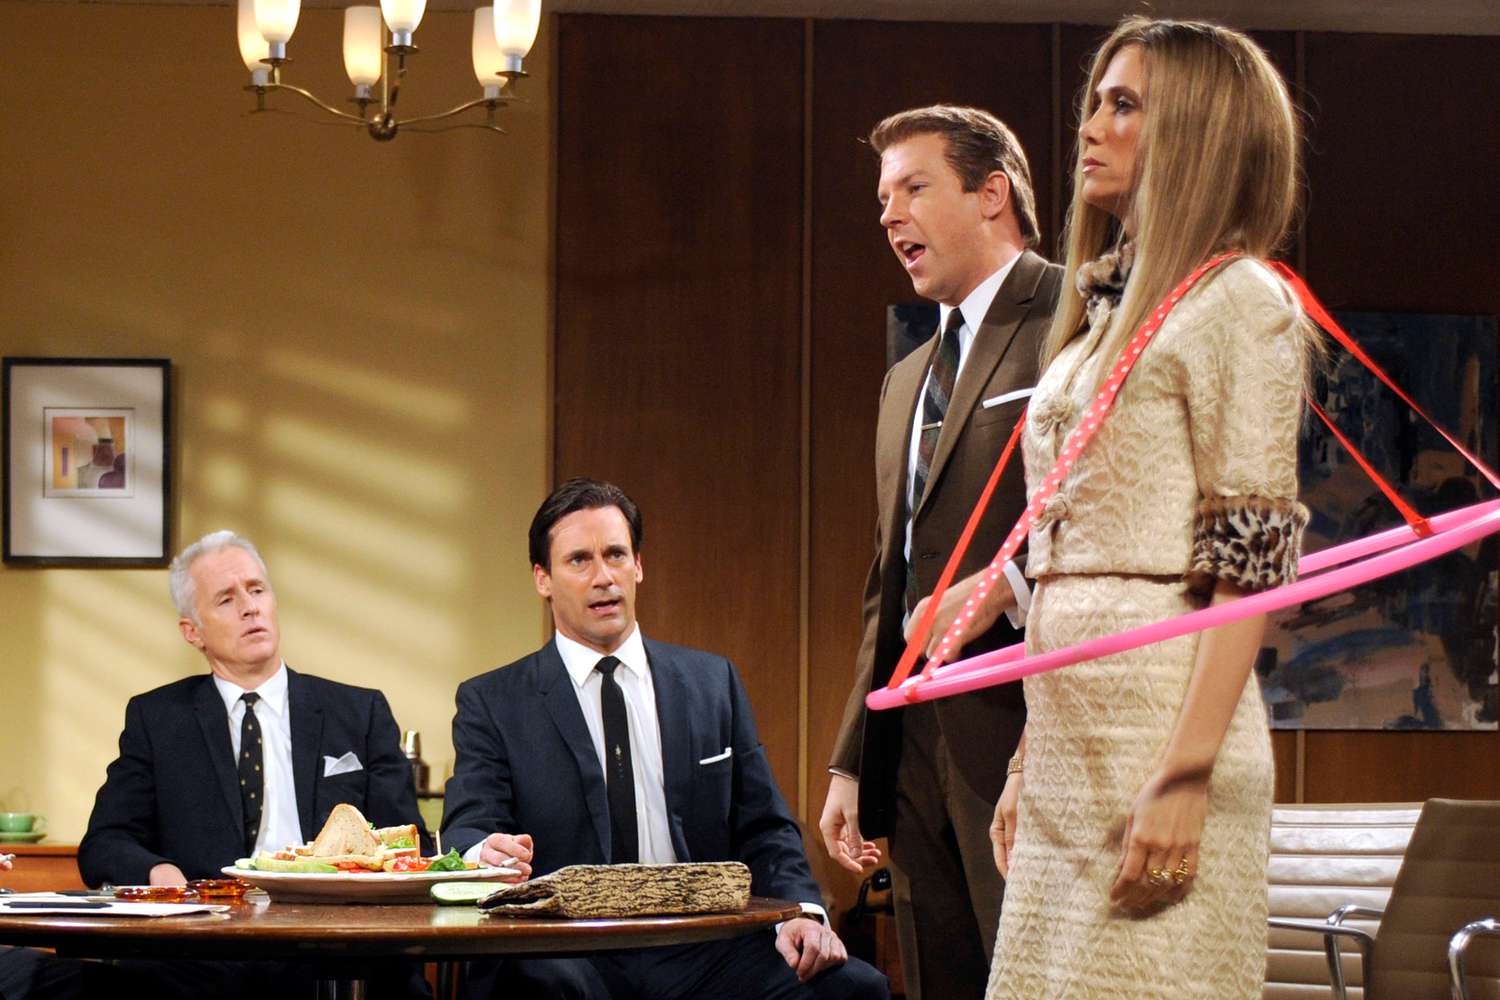 Kristen Wiig, Jon Hamm look back on 'SNL' meeting when cast wore 'Mad Men' drag